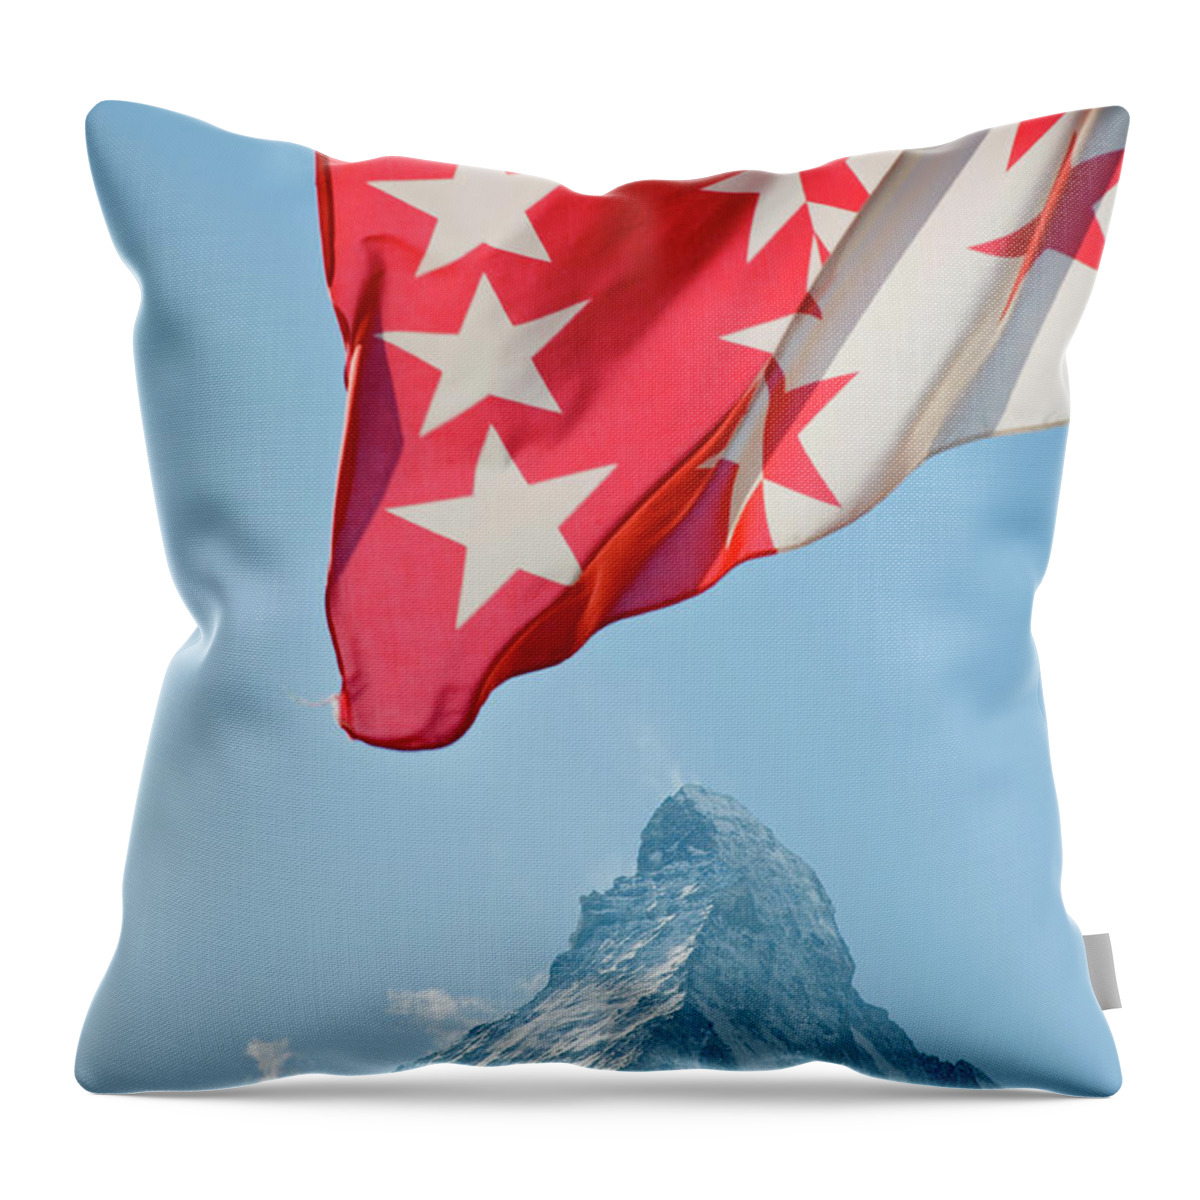 Ip_10237849 Throw Pillow featuring the photograph View Of Matterhorn Mountain And Valais Flag In Switzerland #3 by Jalag / Walter Schmitz